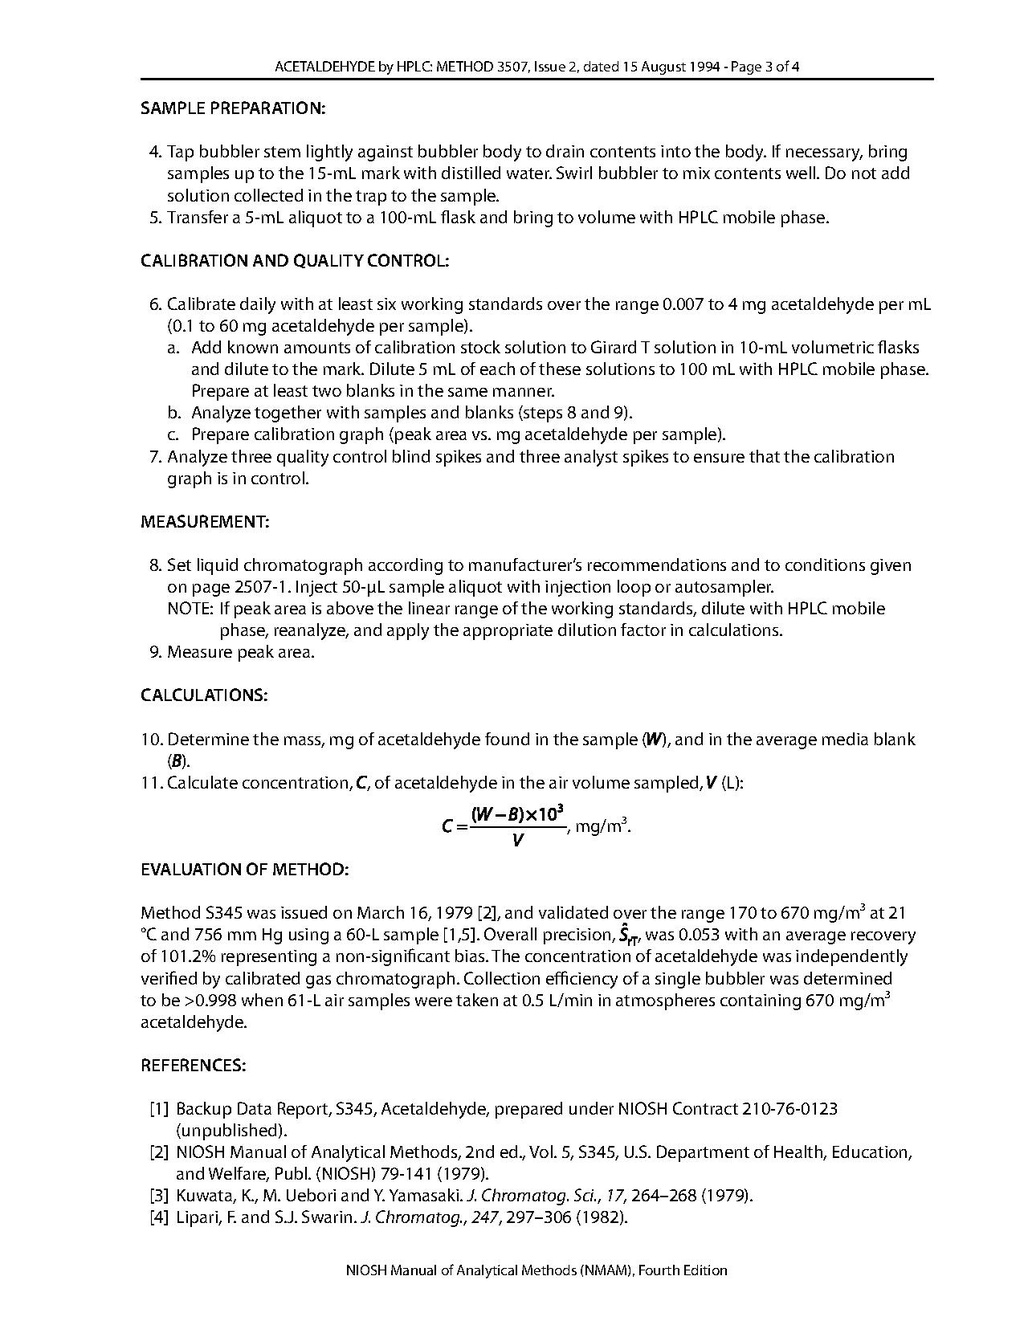 hplc calculations pdf